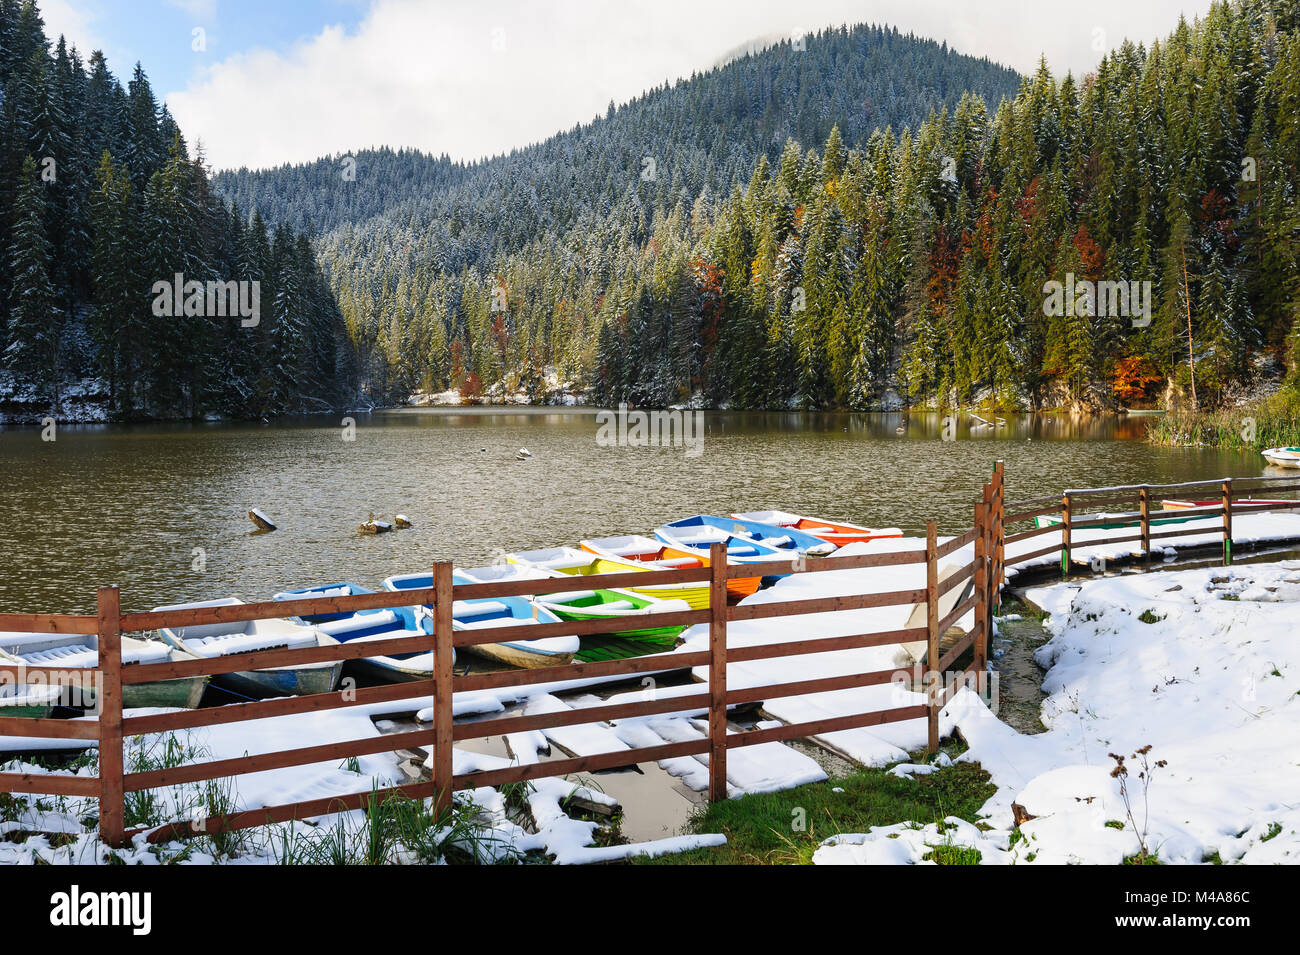 Lacul Rosu with snow, Red Lake, Romania Stock Photo